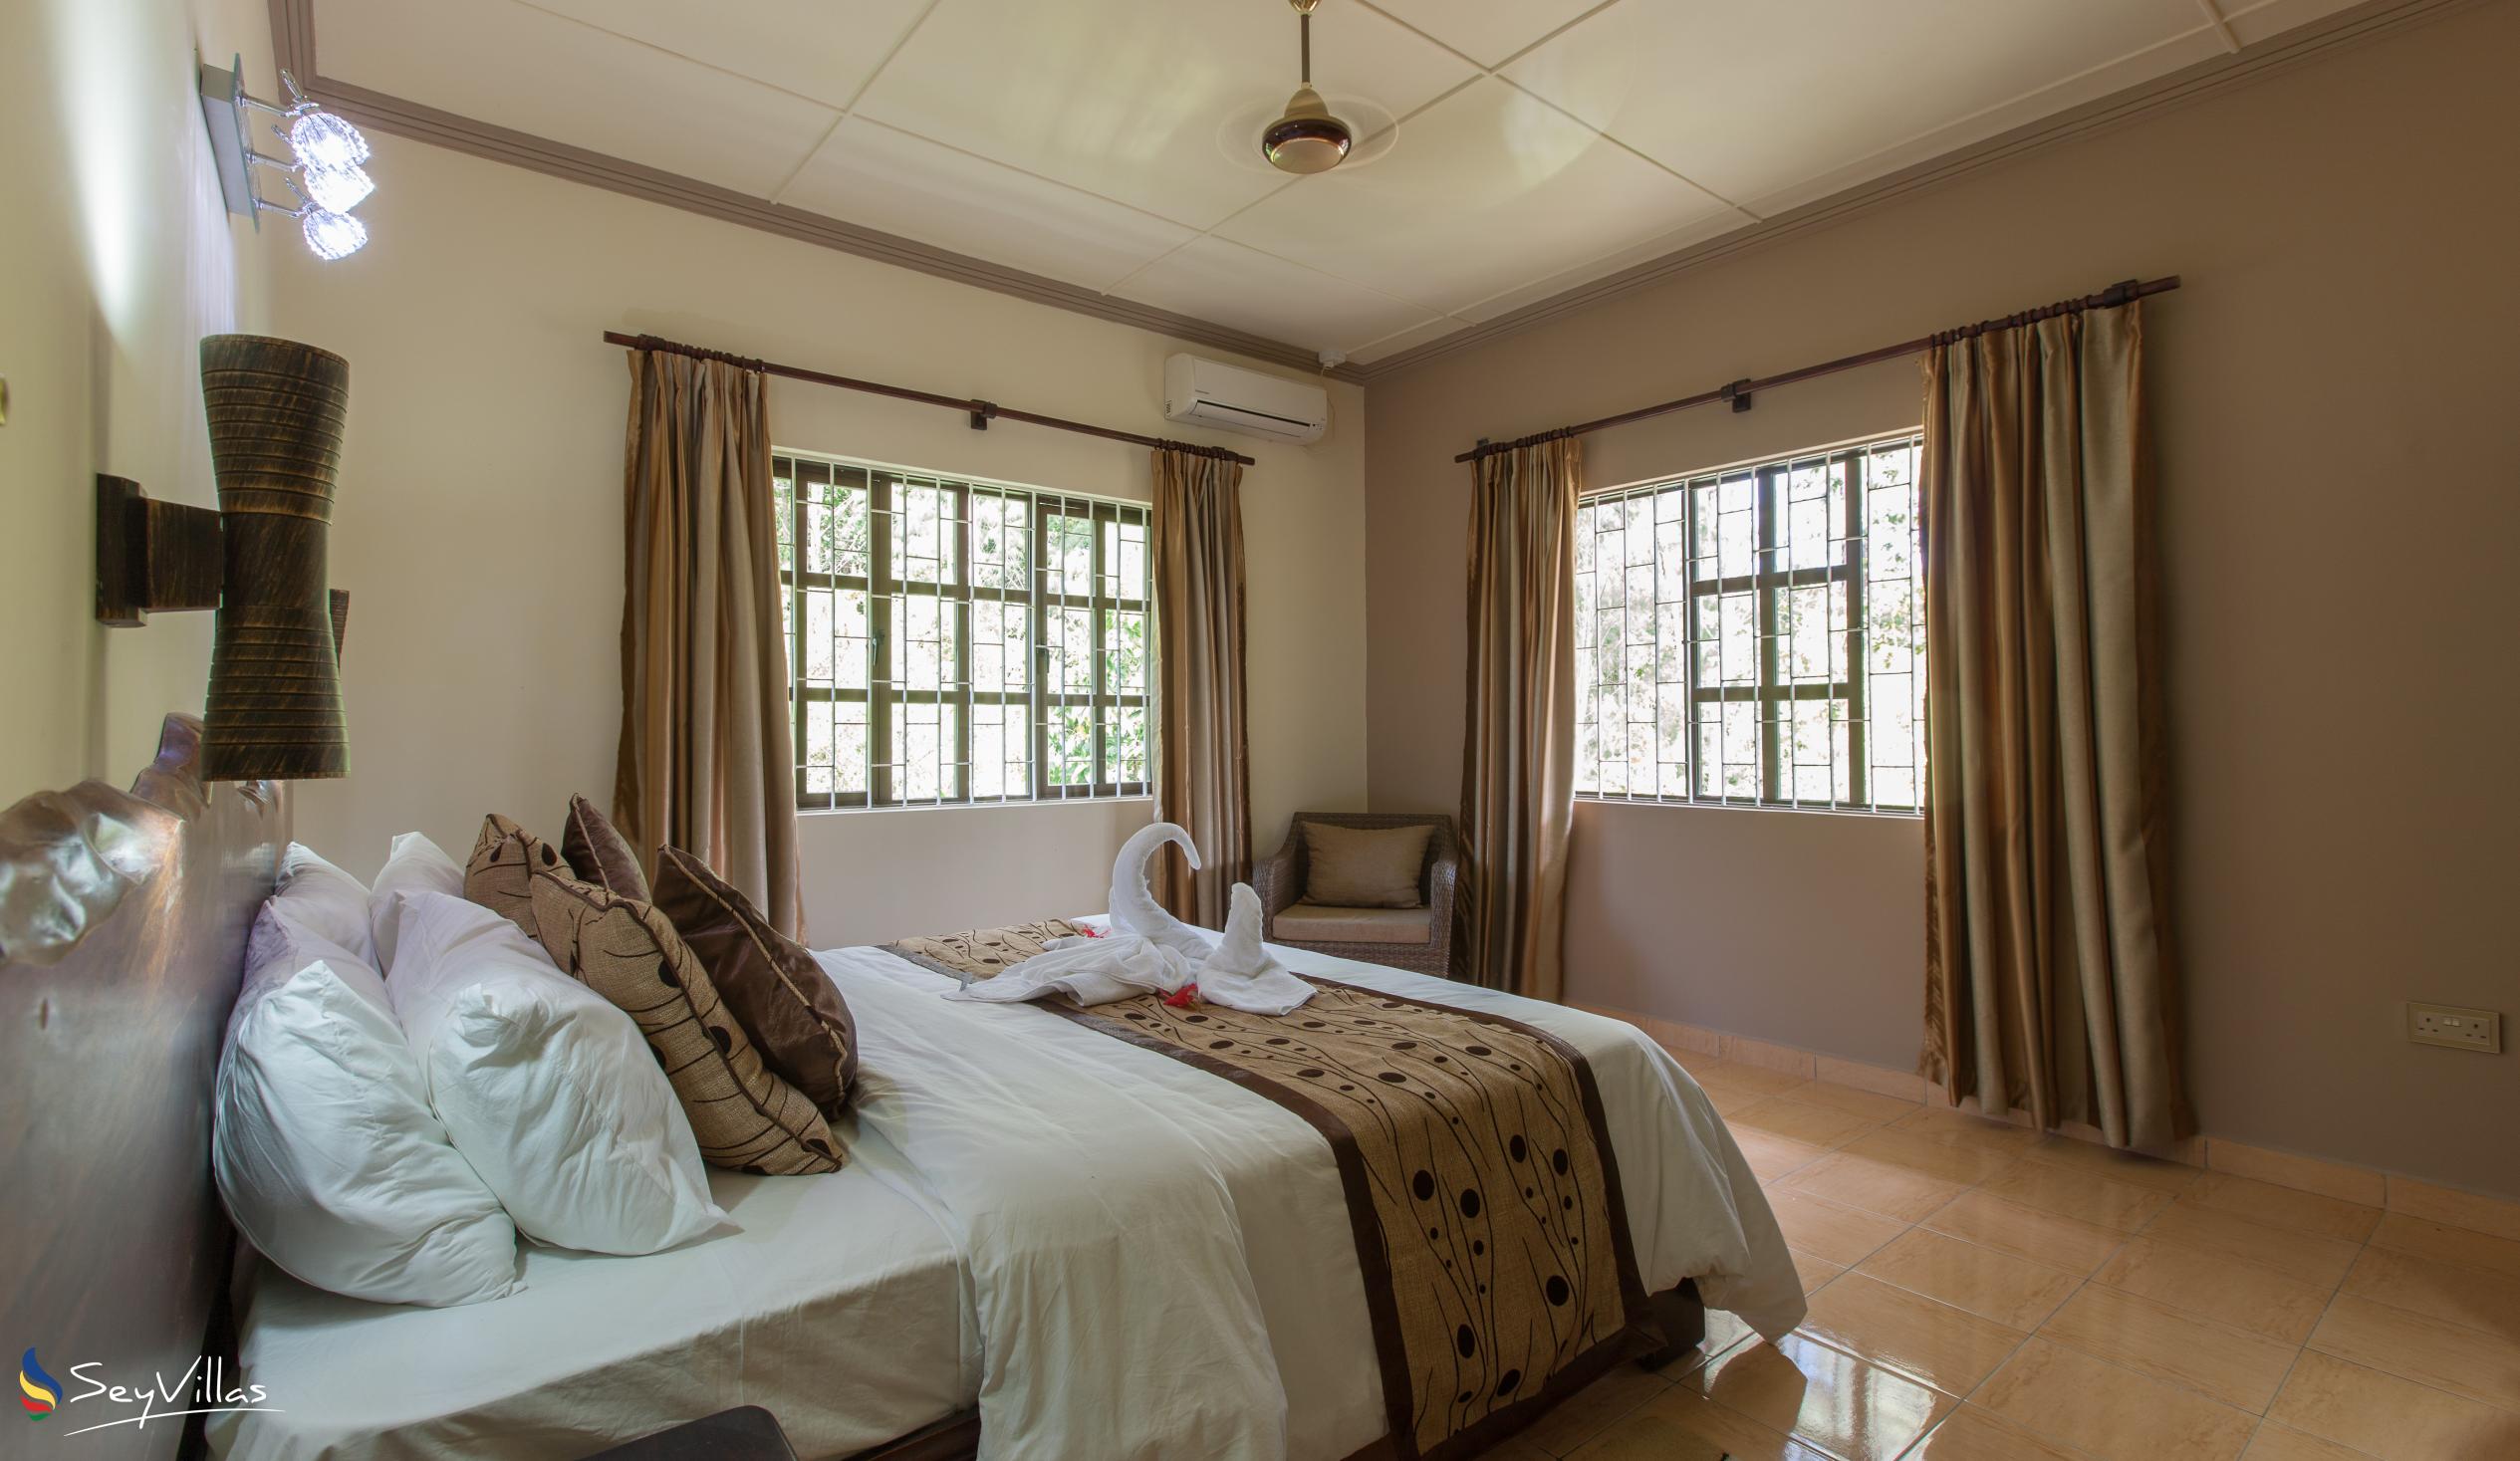 Photo 109: Chez Bea Villa - 1-Bedroom Apartment - Praslin (Seychelles)